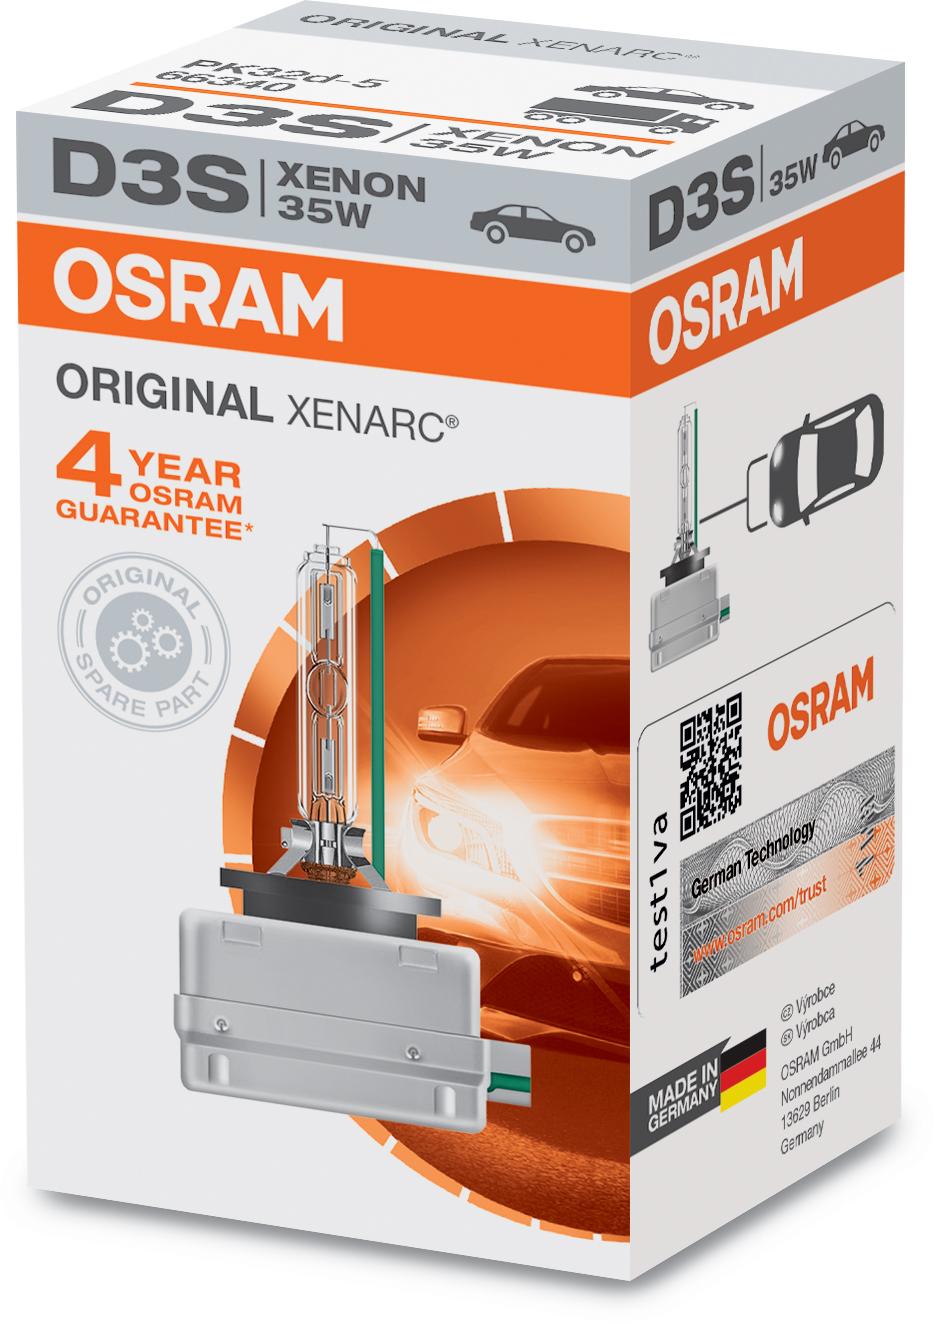 Osram D3S Xenarc Original Xenon Hid Single Pack